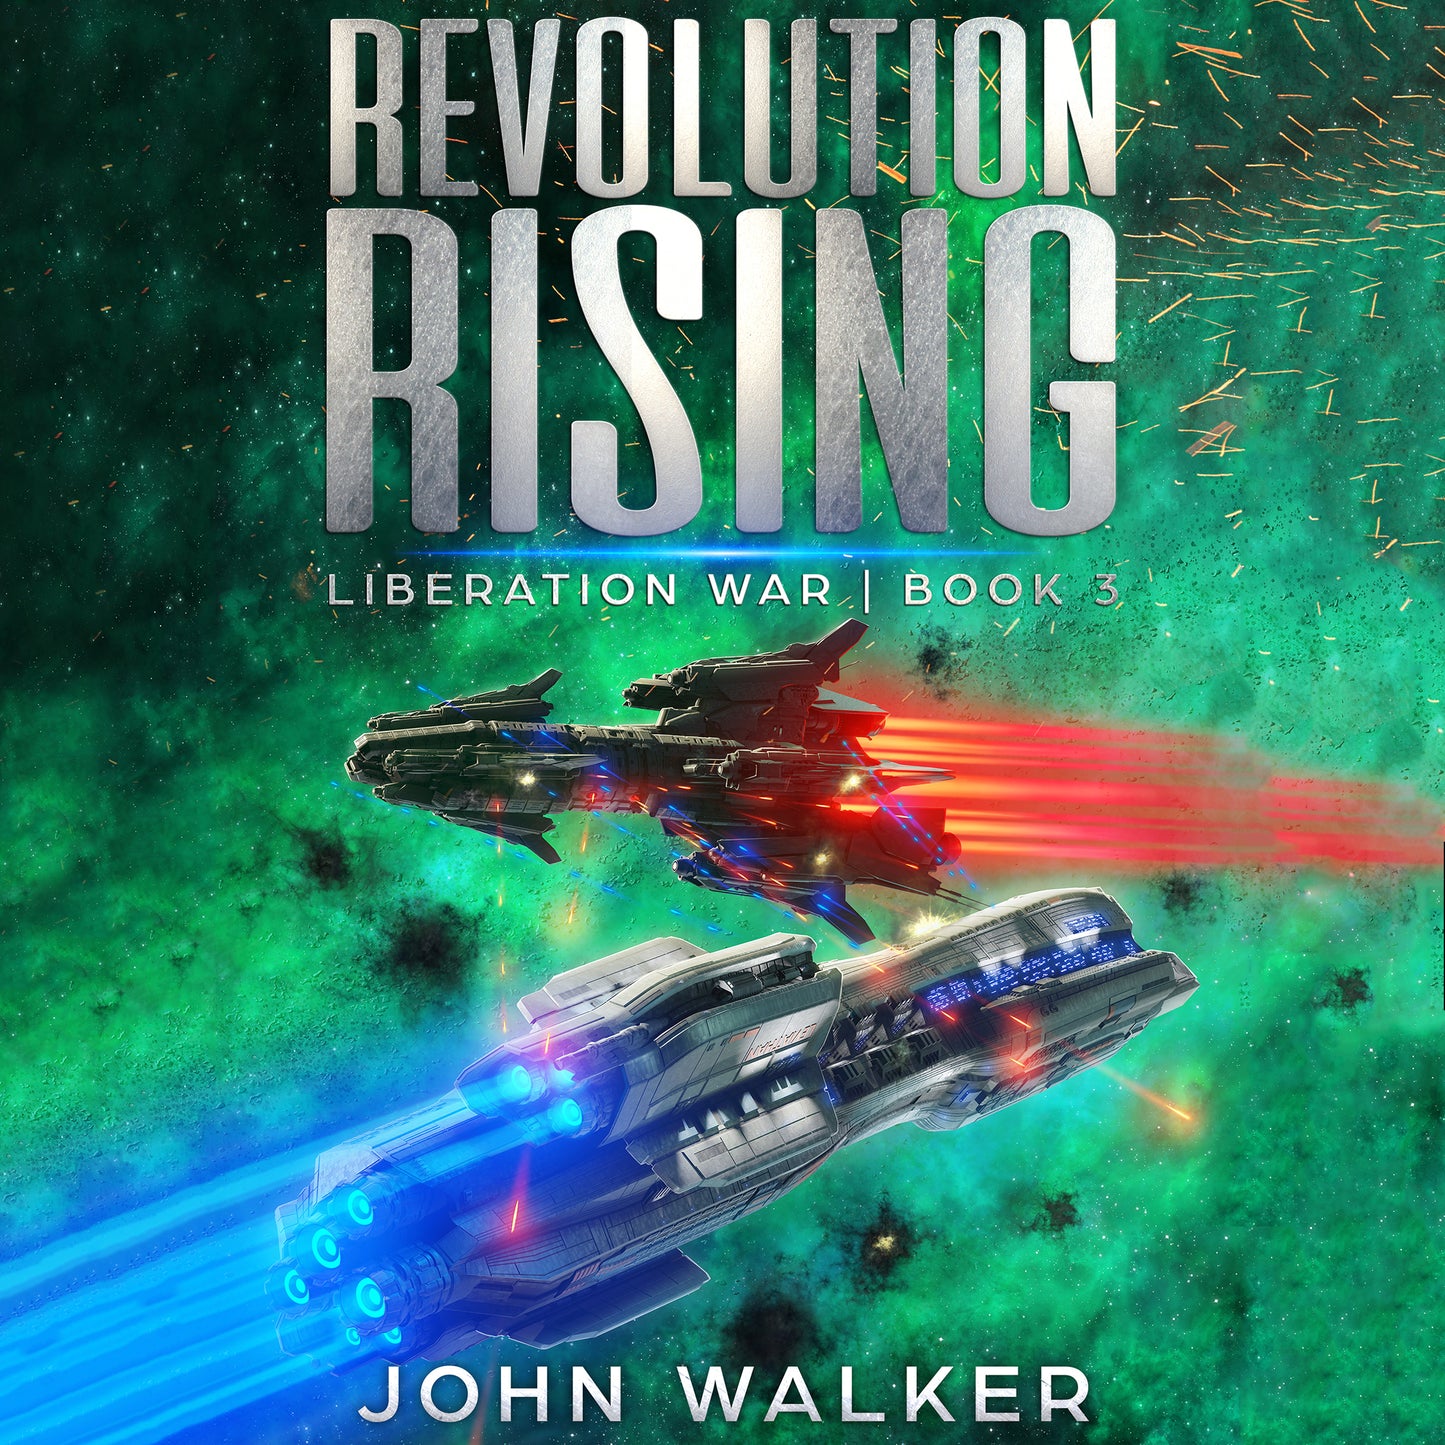 Revolution Rising: Liberation War Book 3 Audiobook